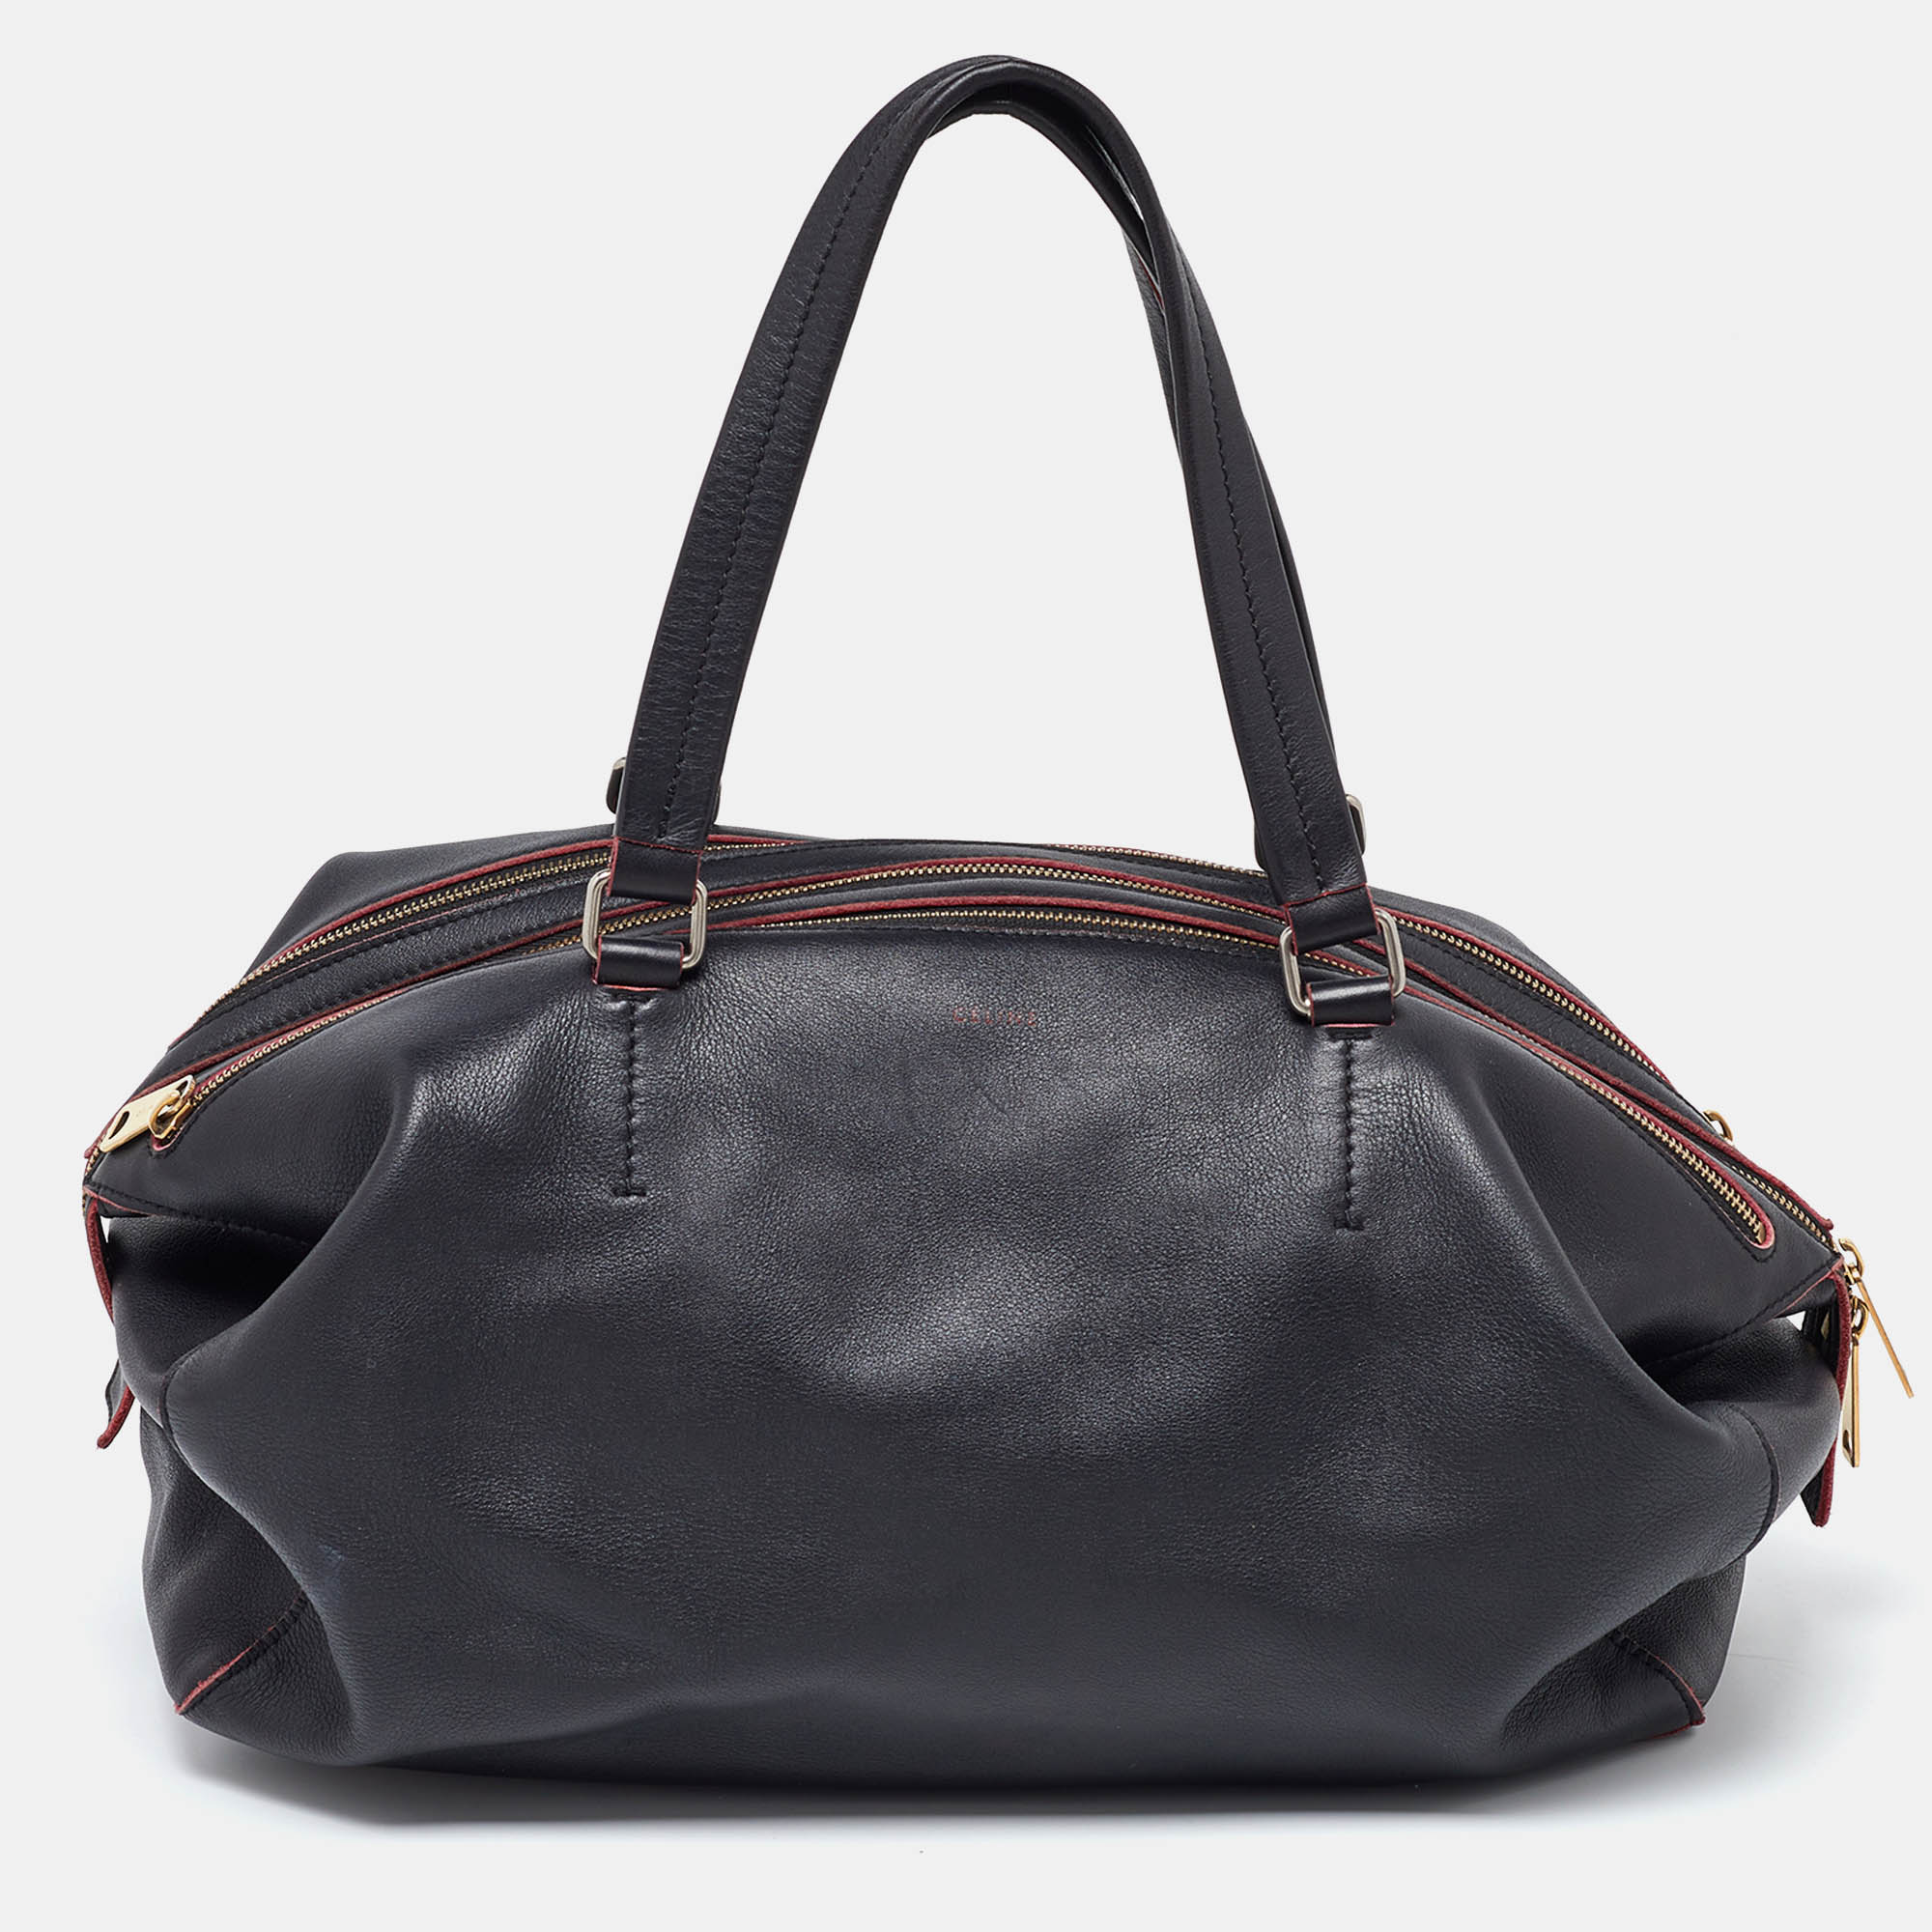 Celine black leather zip boston bag